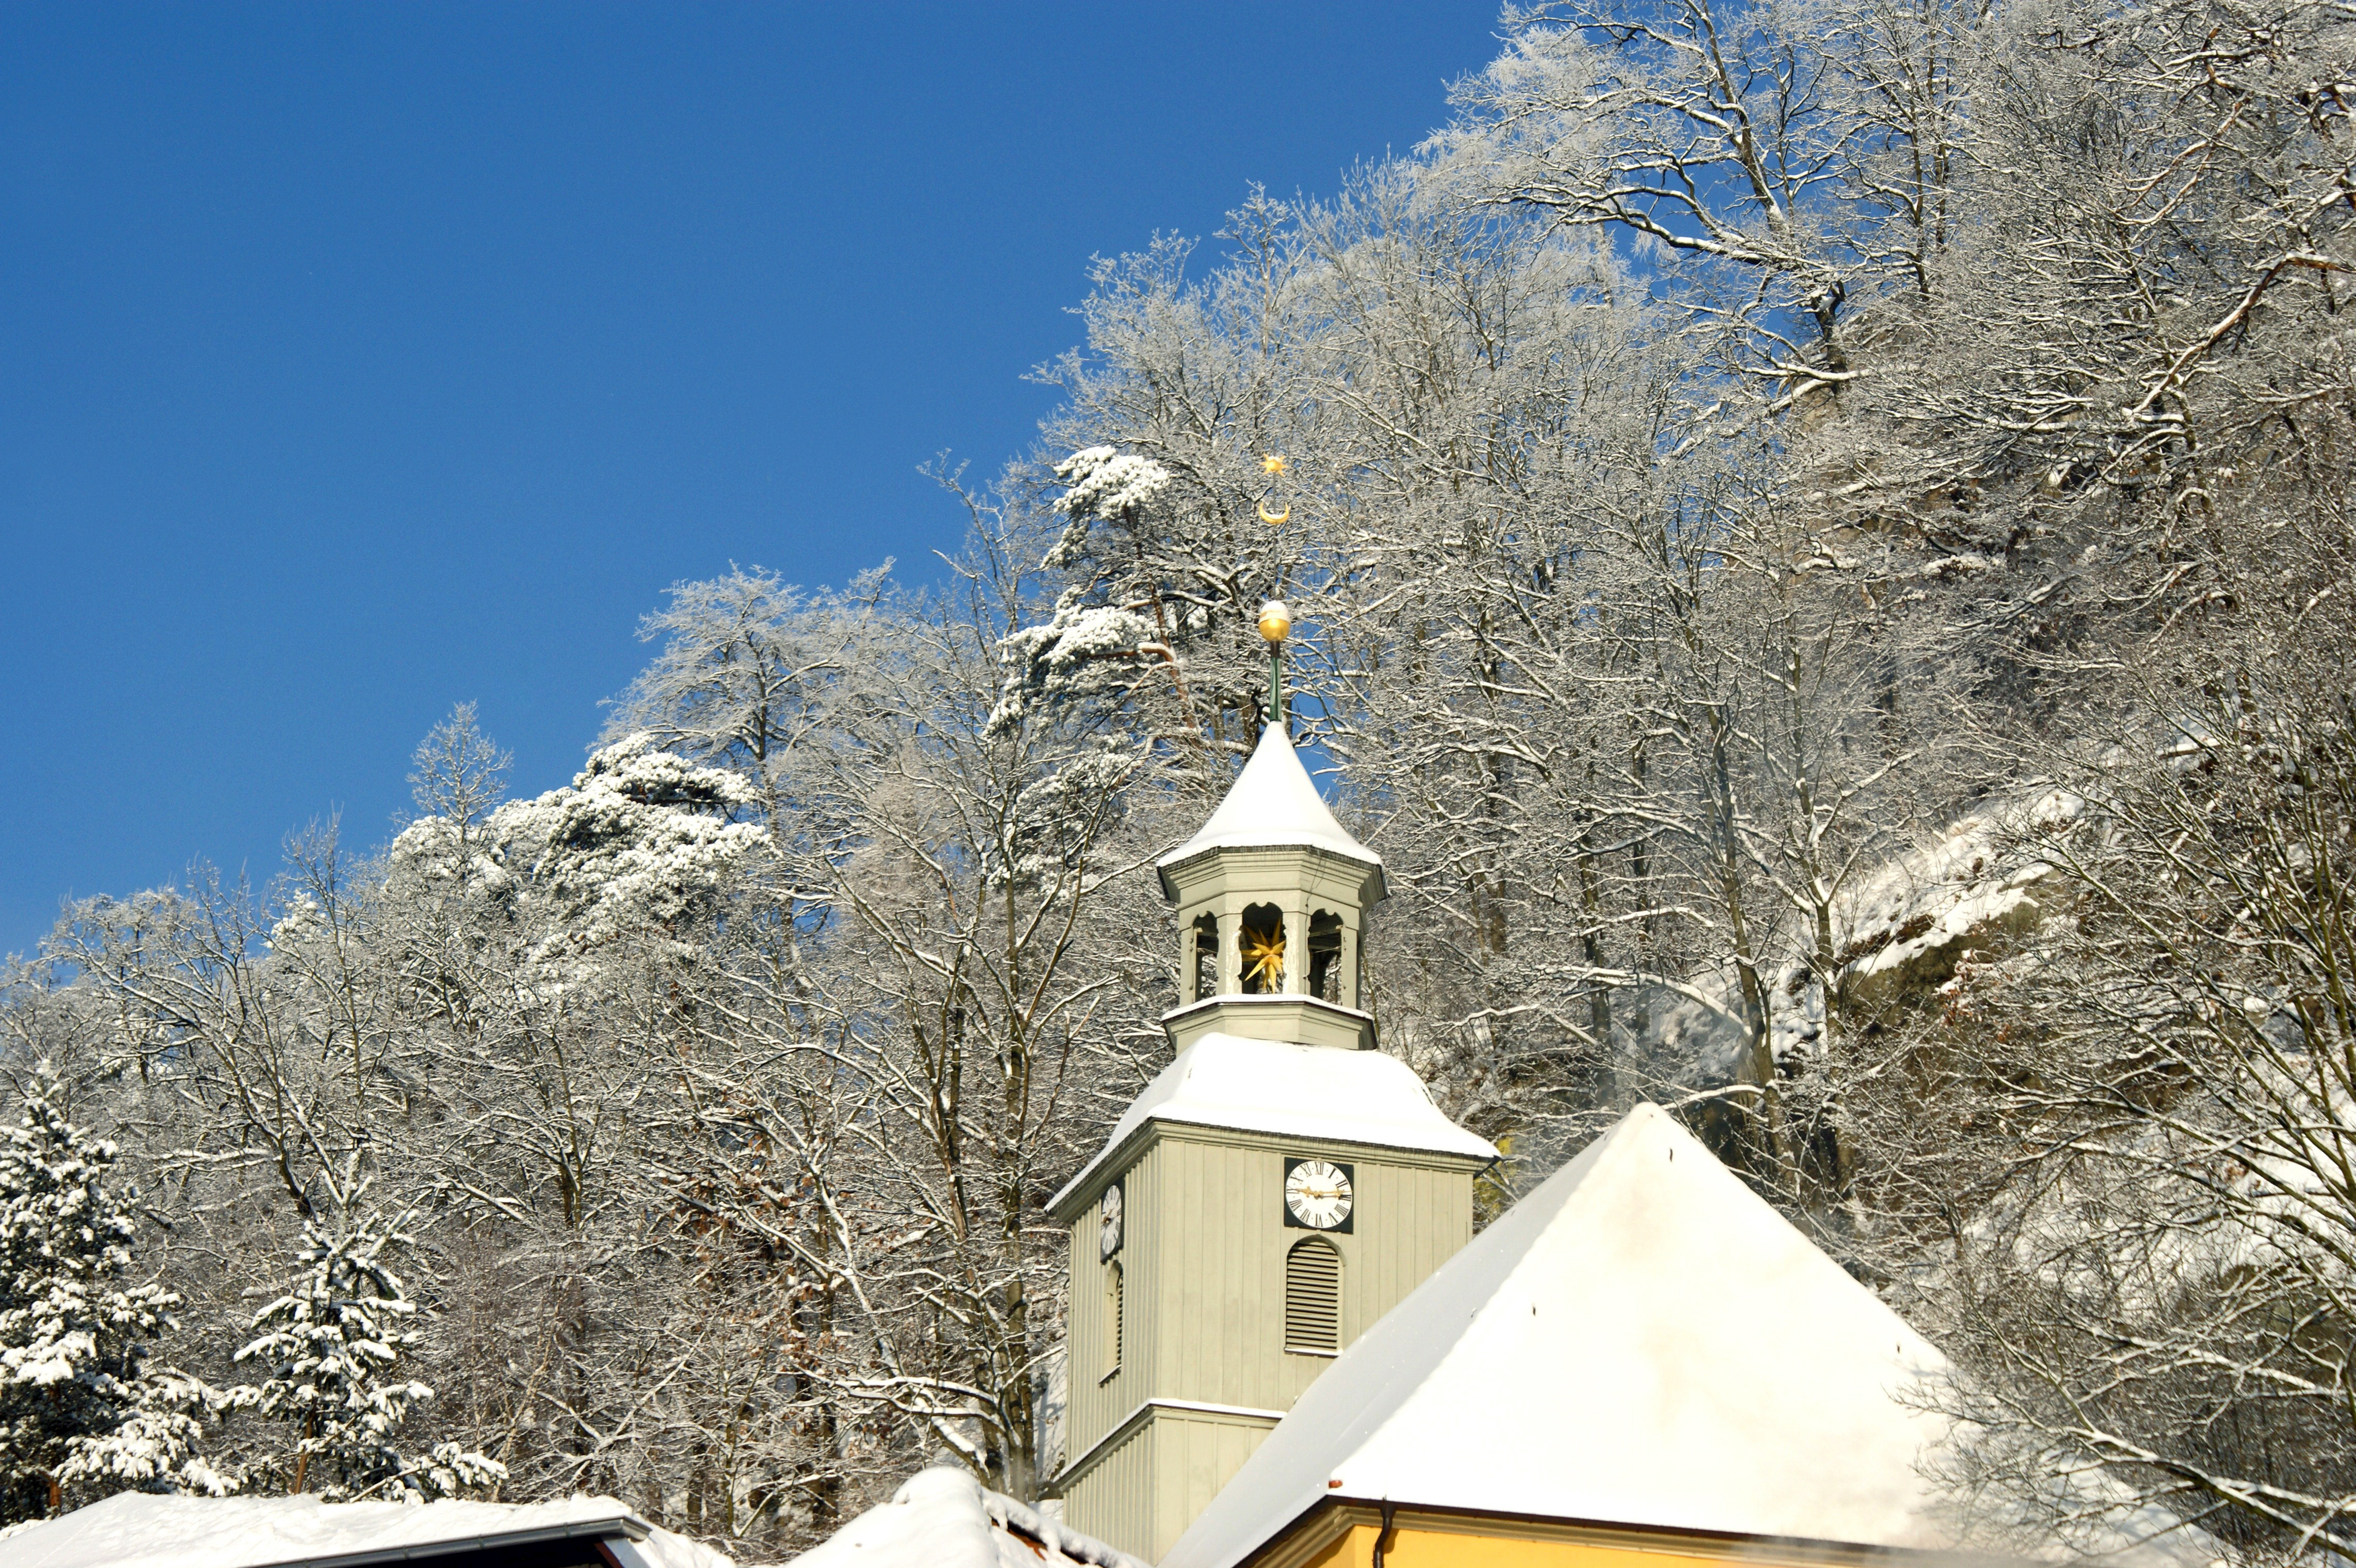 Photo: Zittau in the winter